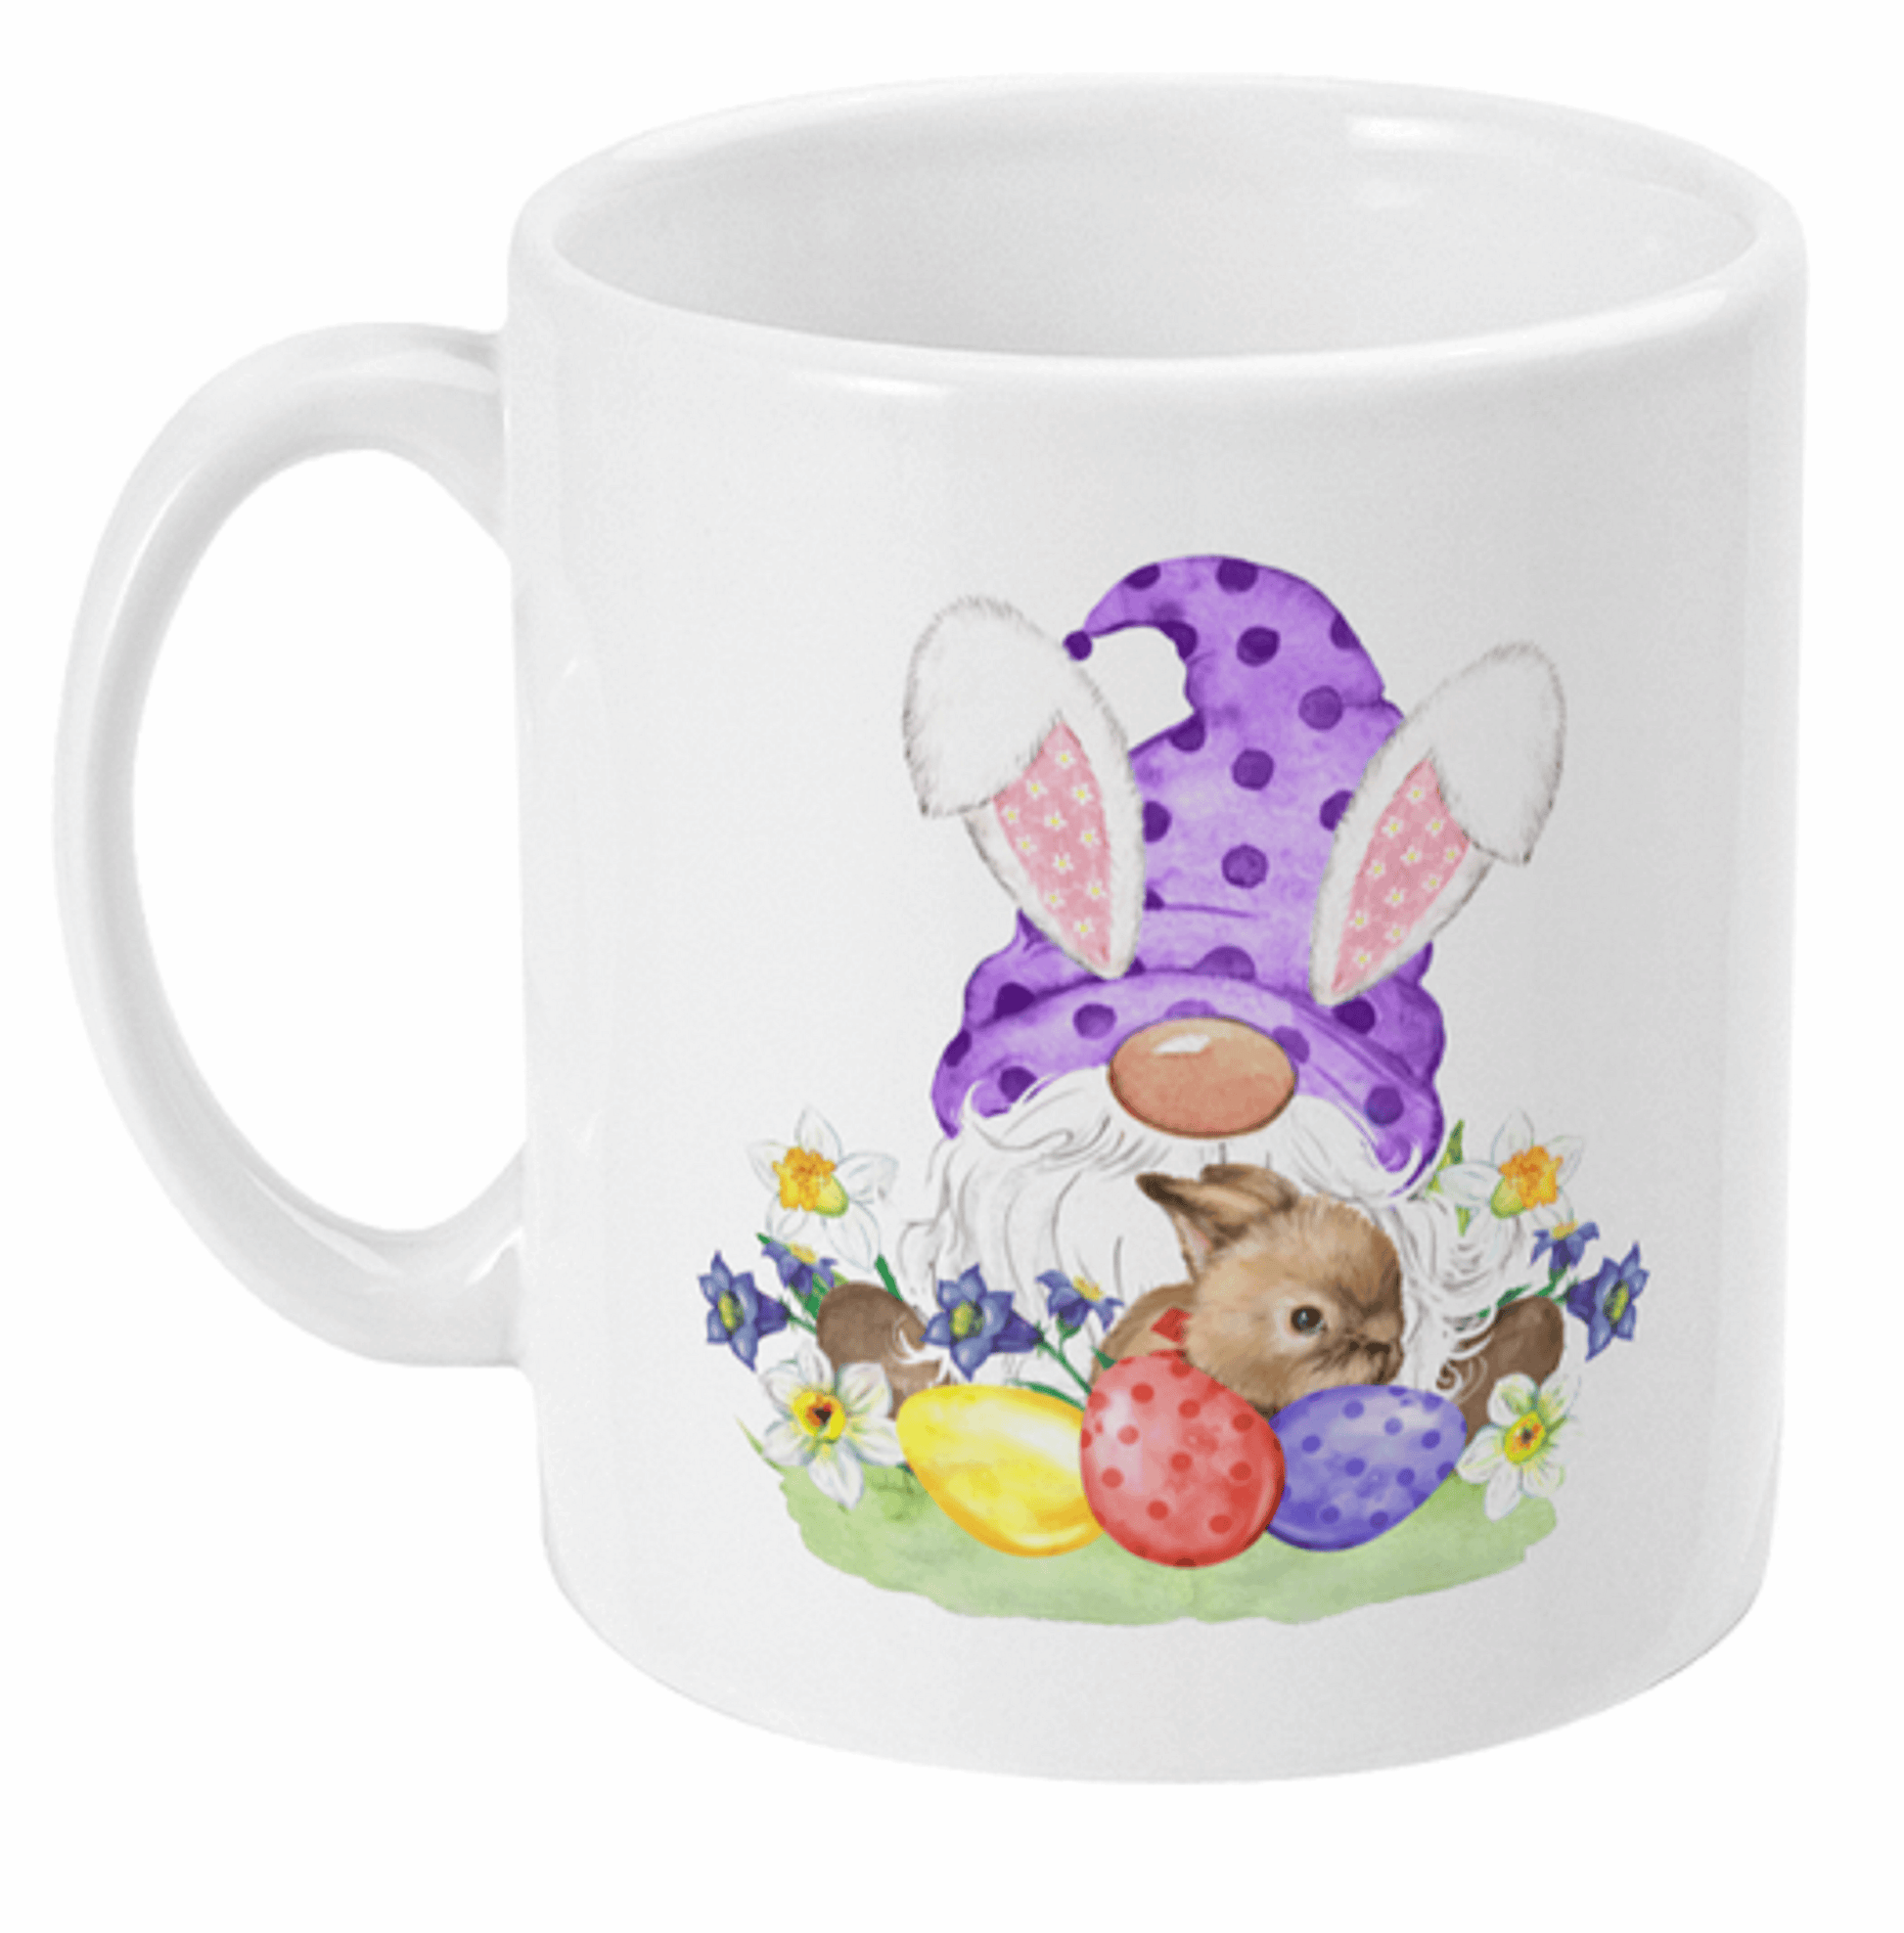  Easter Bunny Gnome Coffee Mug by Free Spirit Accessories sold by Free Spirit Accessories